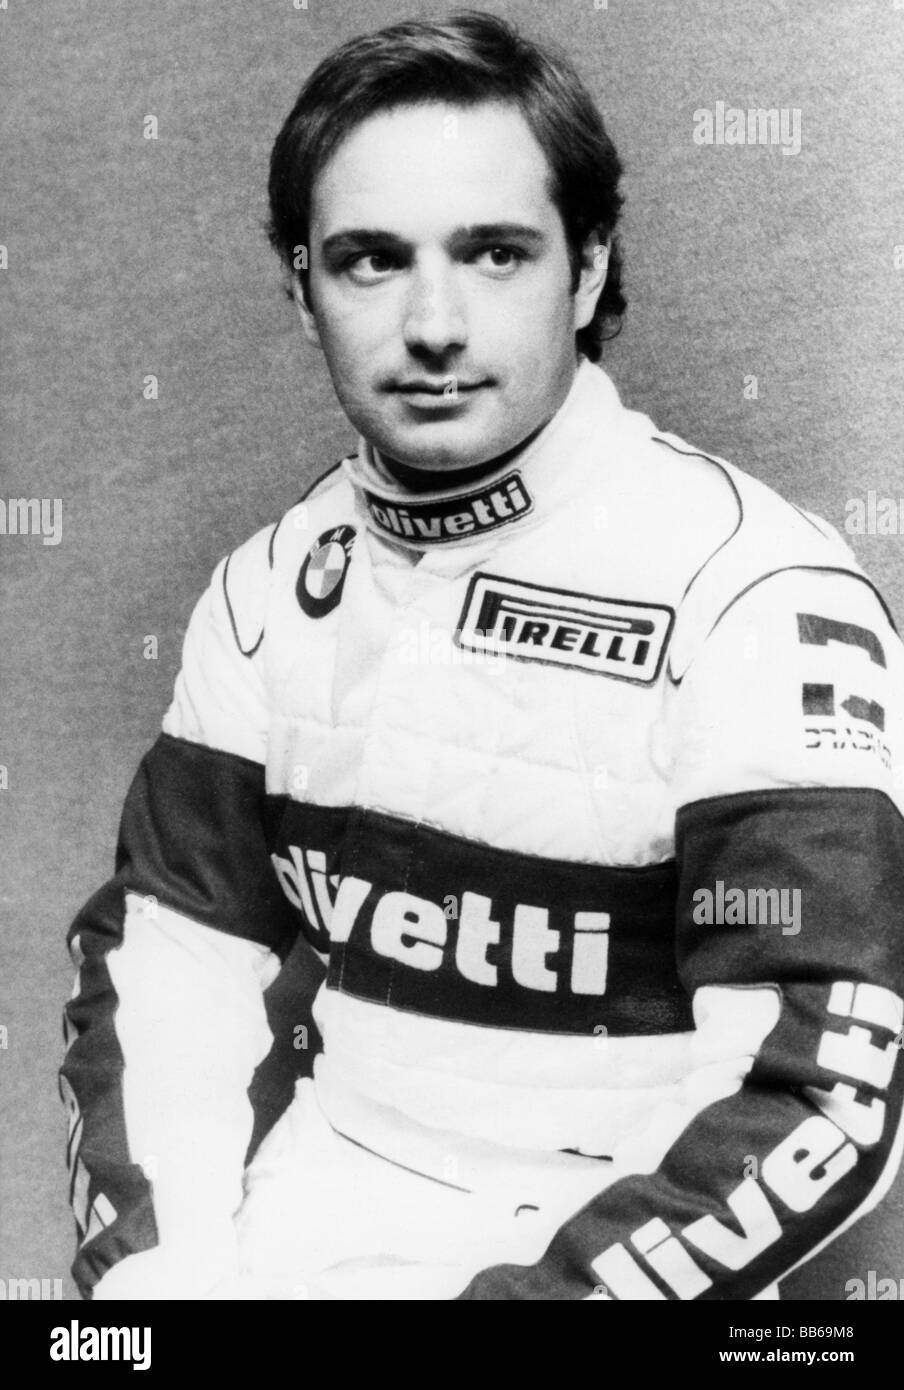 Angelis, Elio de, 26.3.1958 - 15.5.1986, atleta italiano, automobilista, mezza lunghezza, 1986, Foto Stock